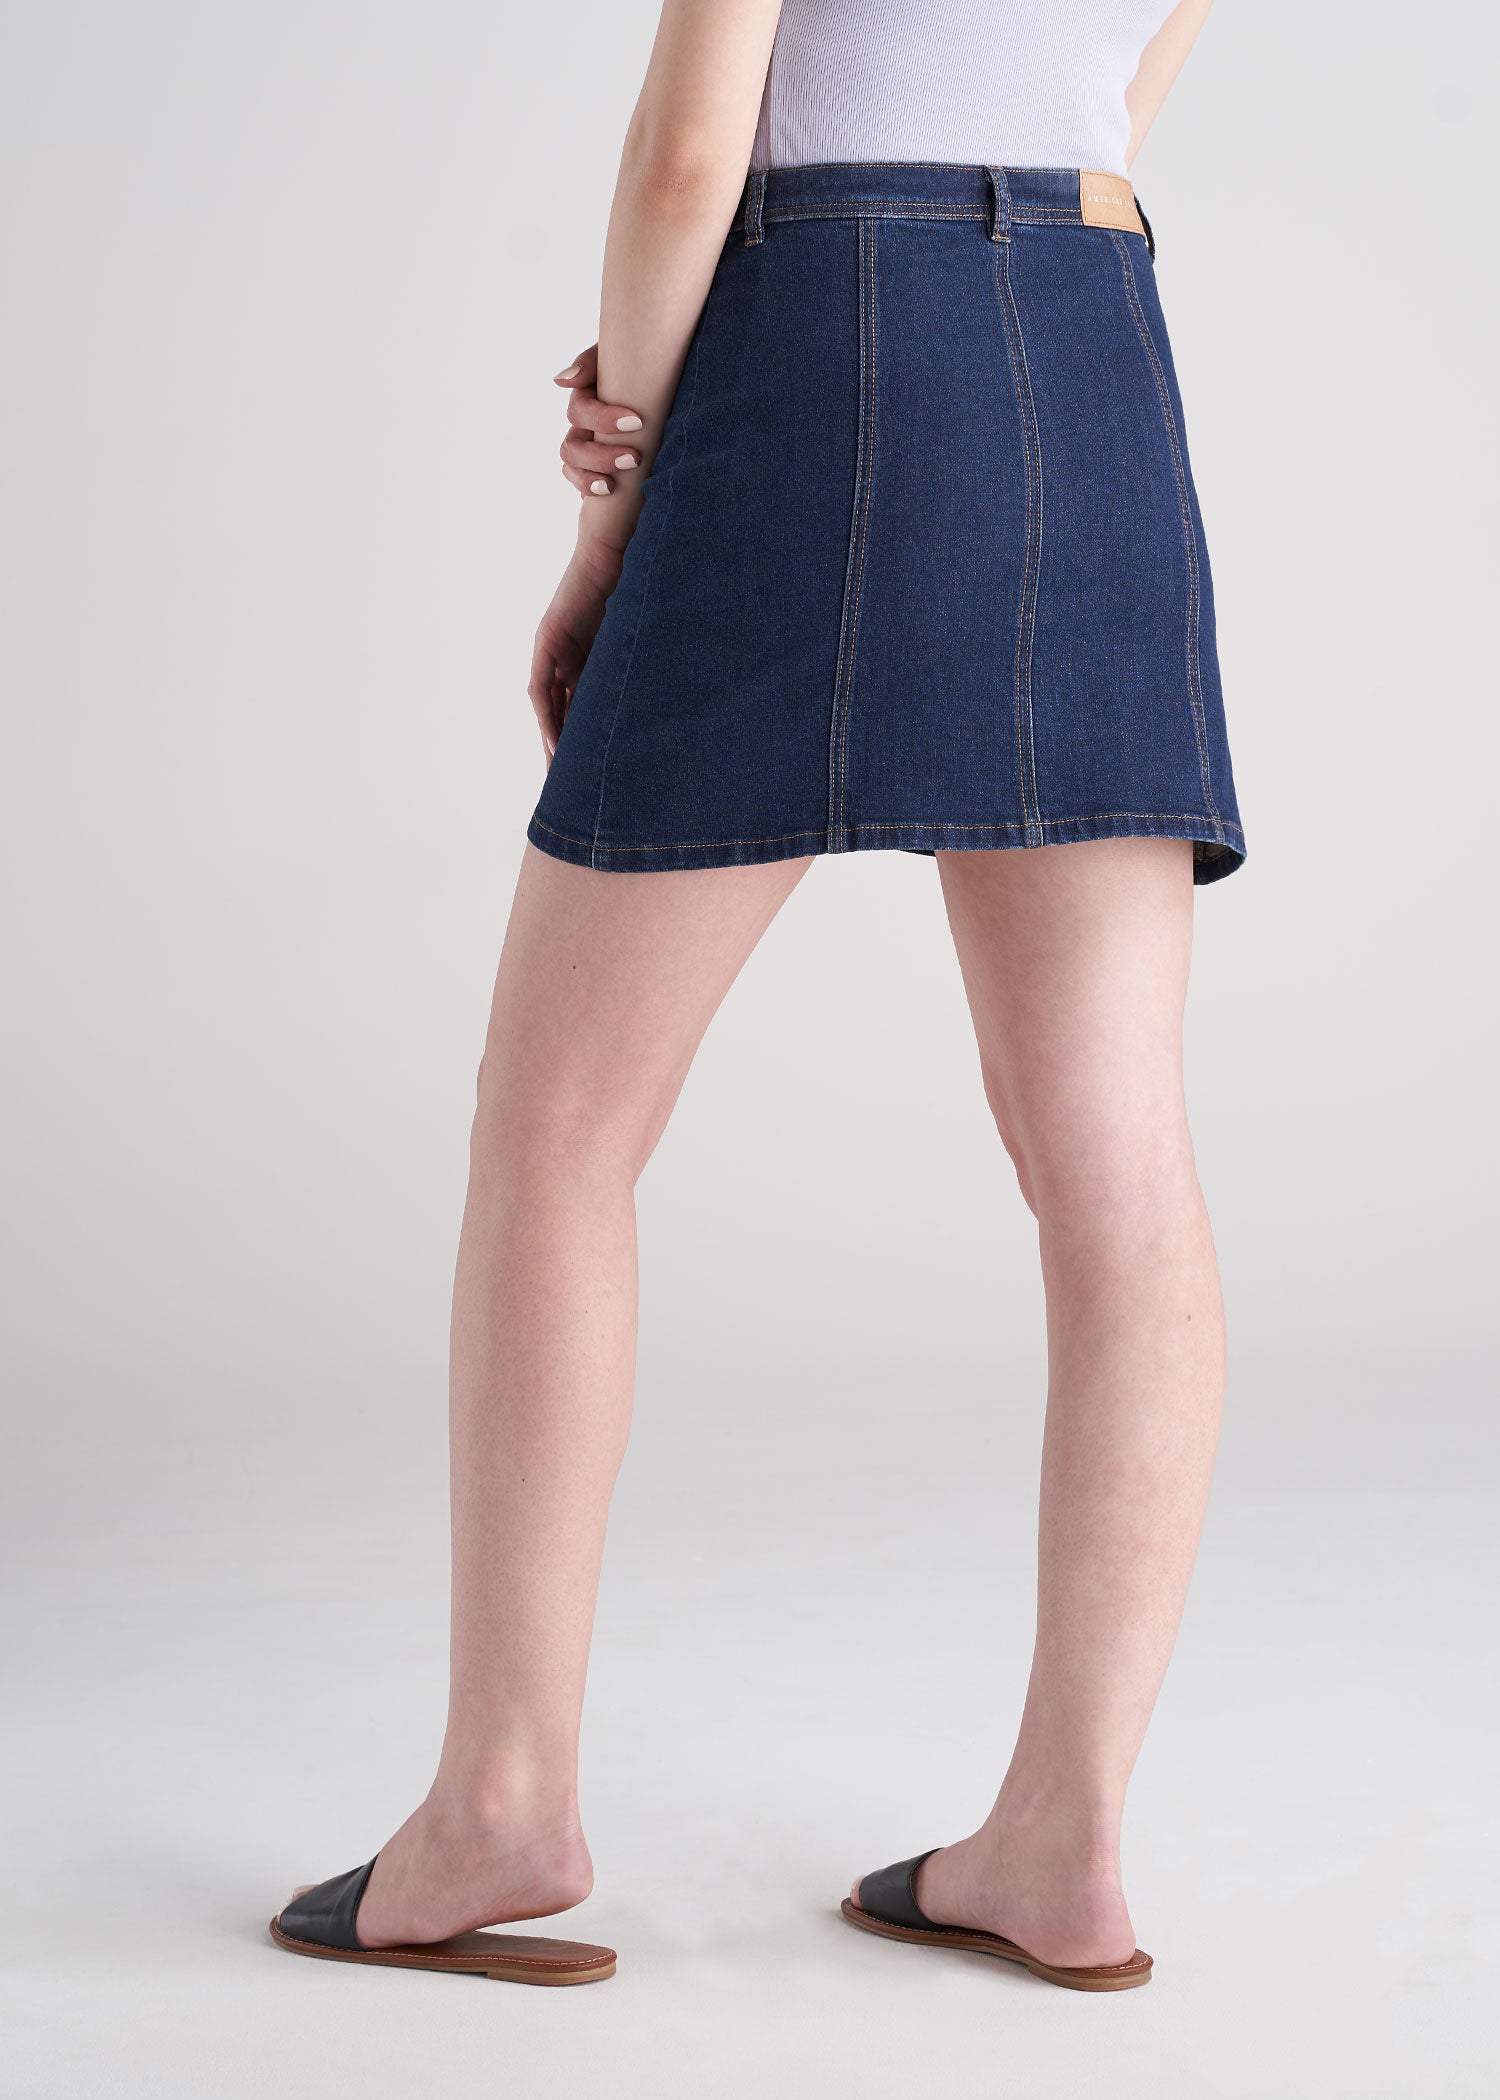 How To Style A Denim Skirt - an indigo day - Fashion Blog